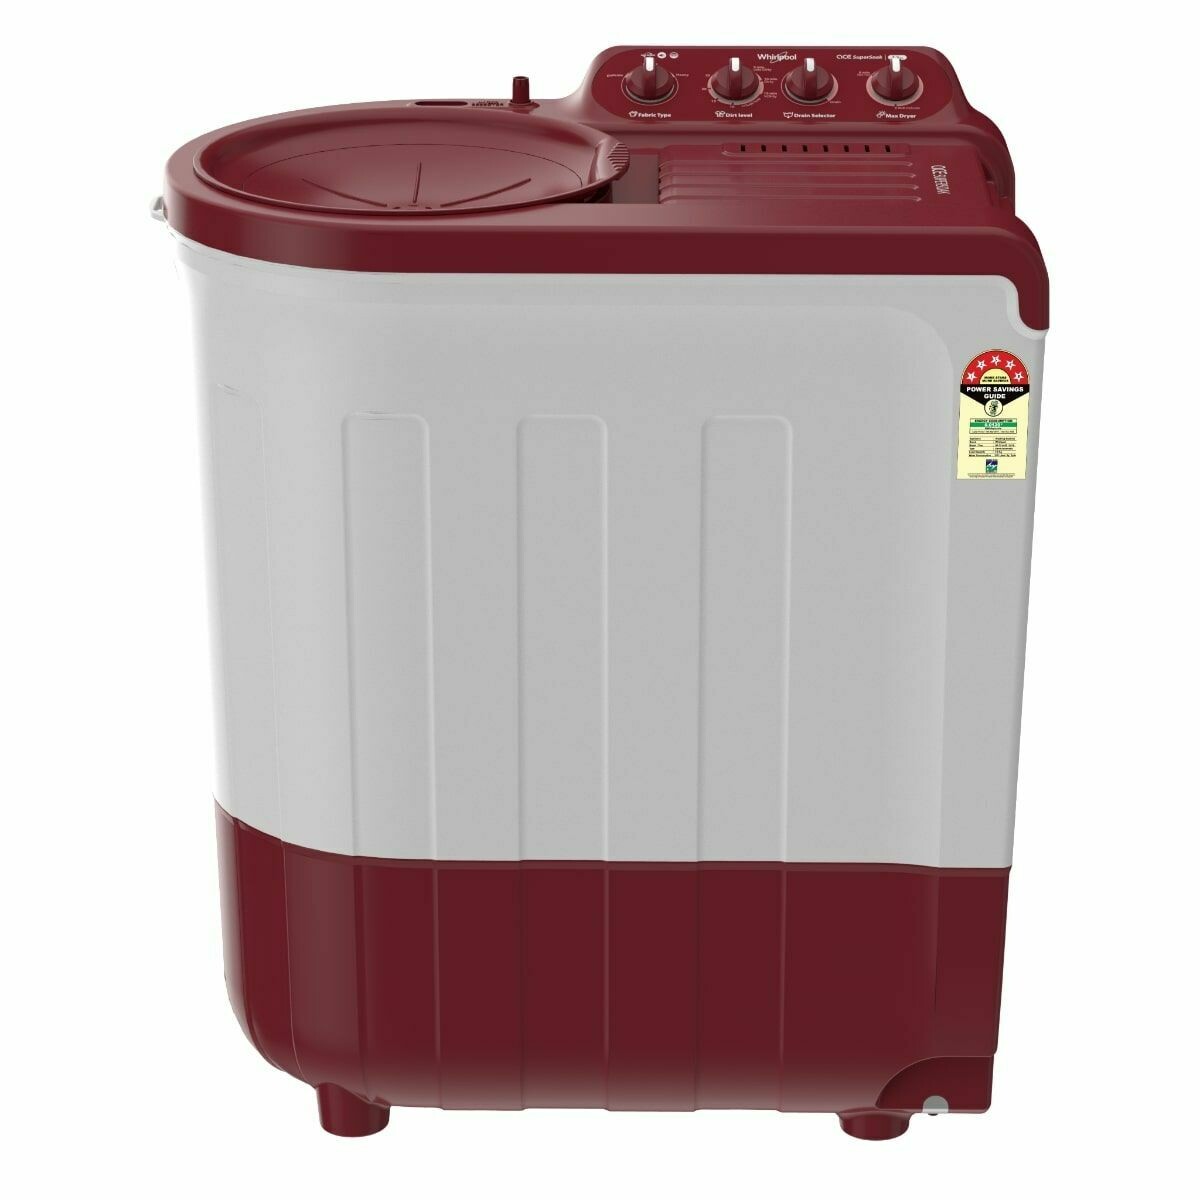 Ace Supersoak 7.5 Kg Semi Automatic Washing Machine (Supersoak Technology, Coral Red)